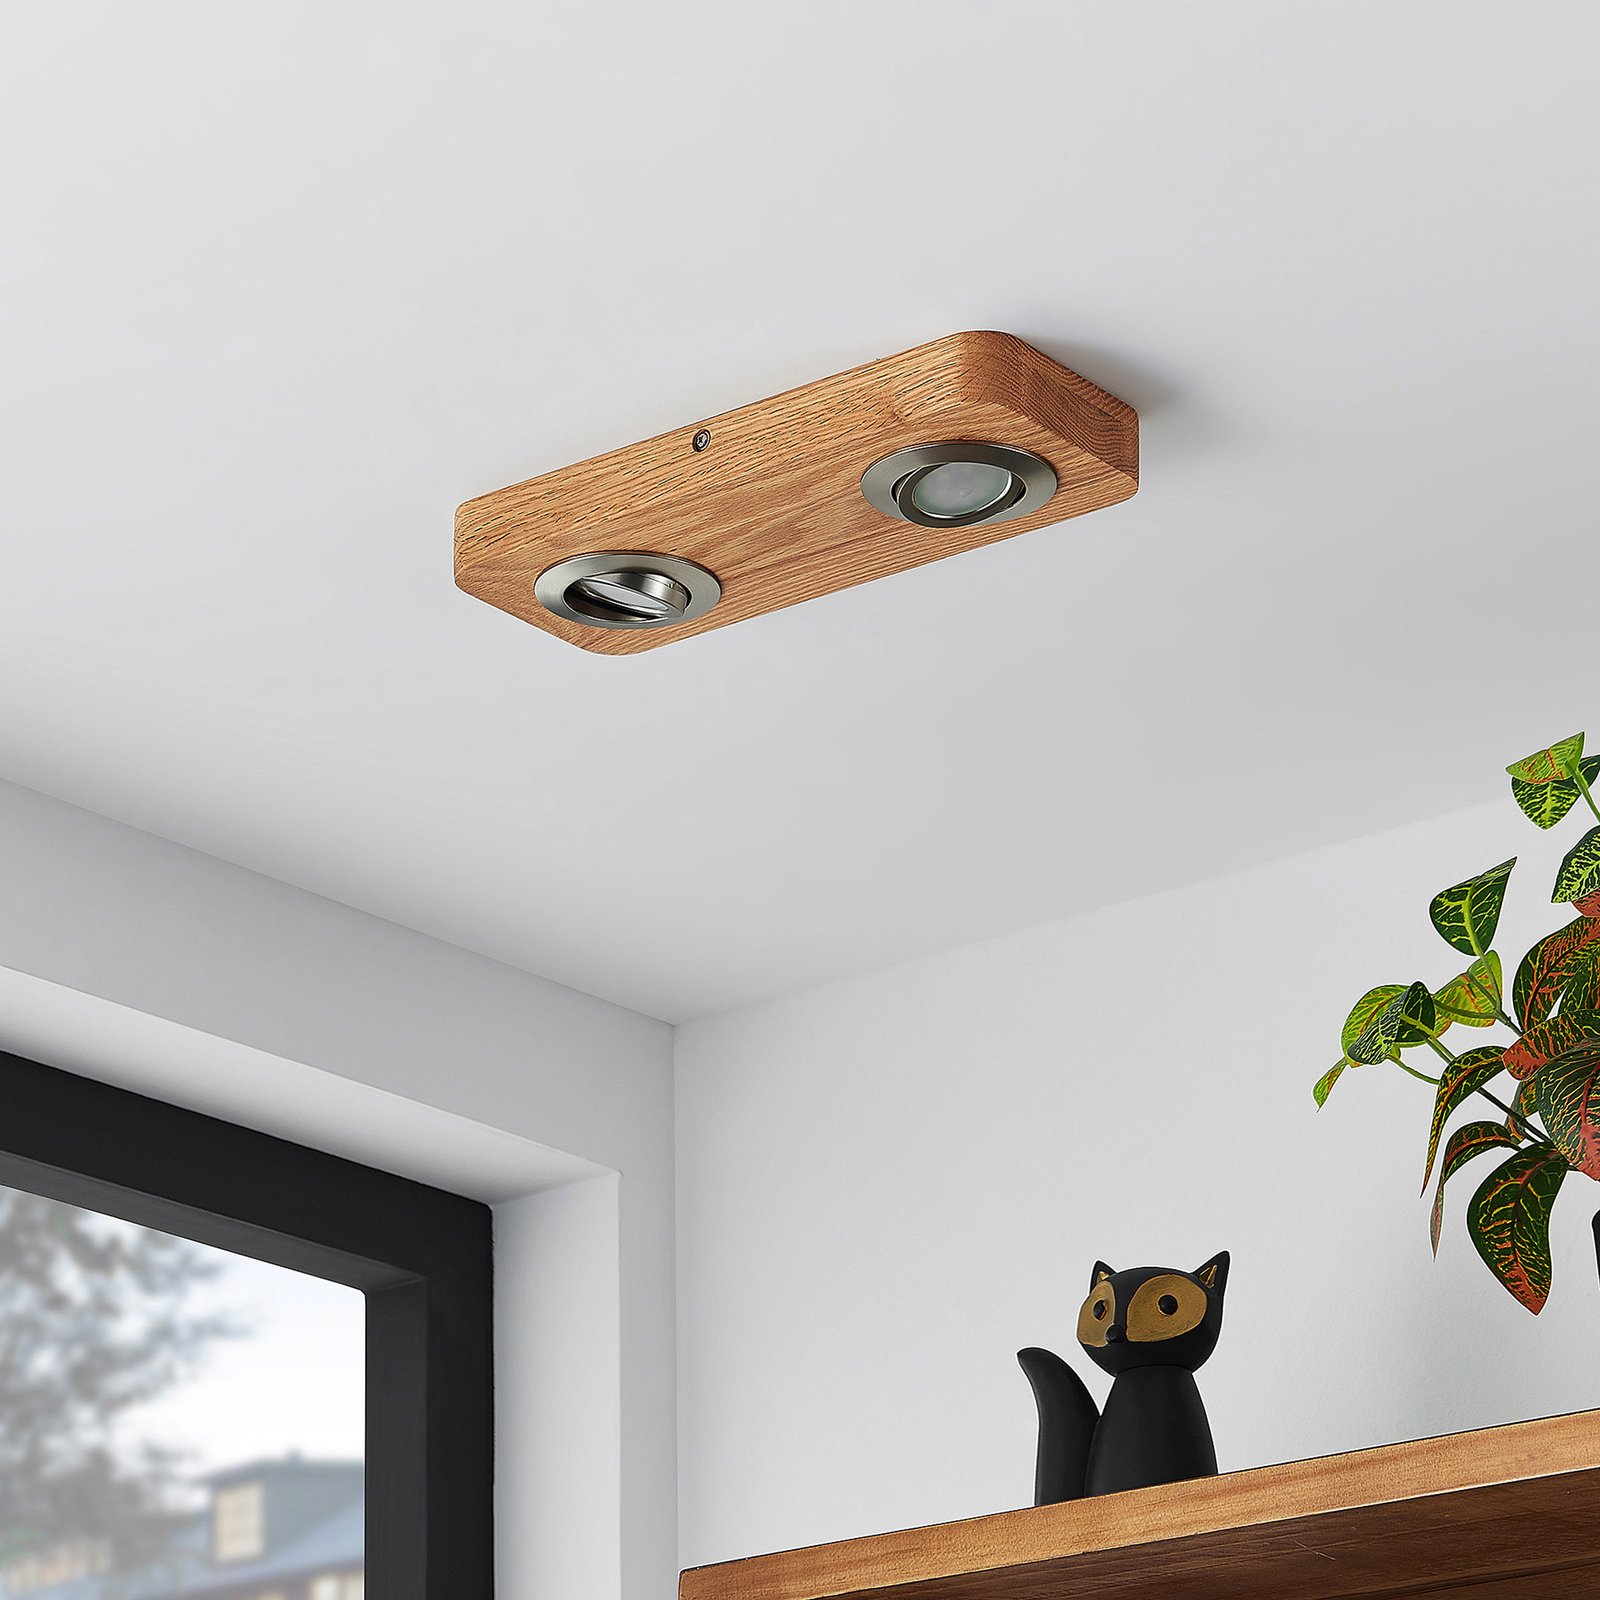 Lindby Mikari LED ceiling light in wood, 2-bulb